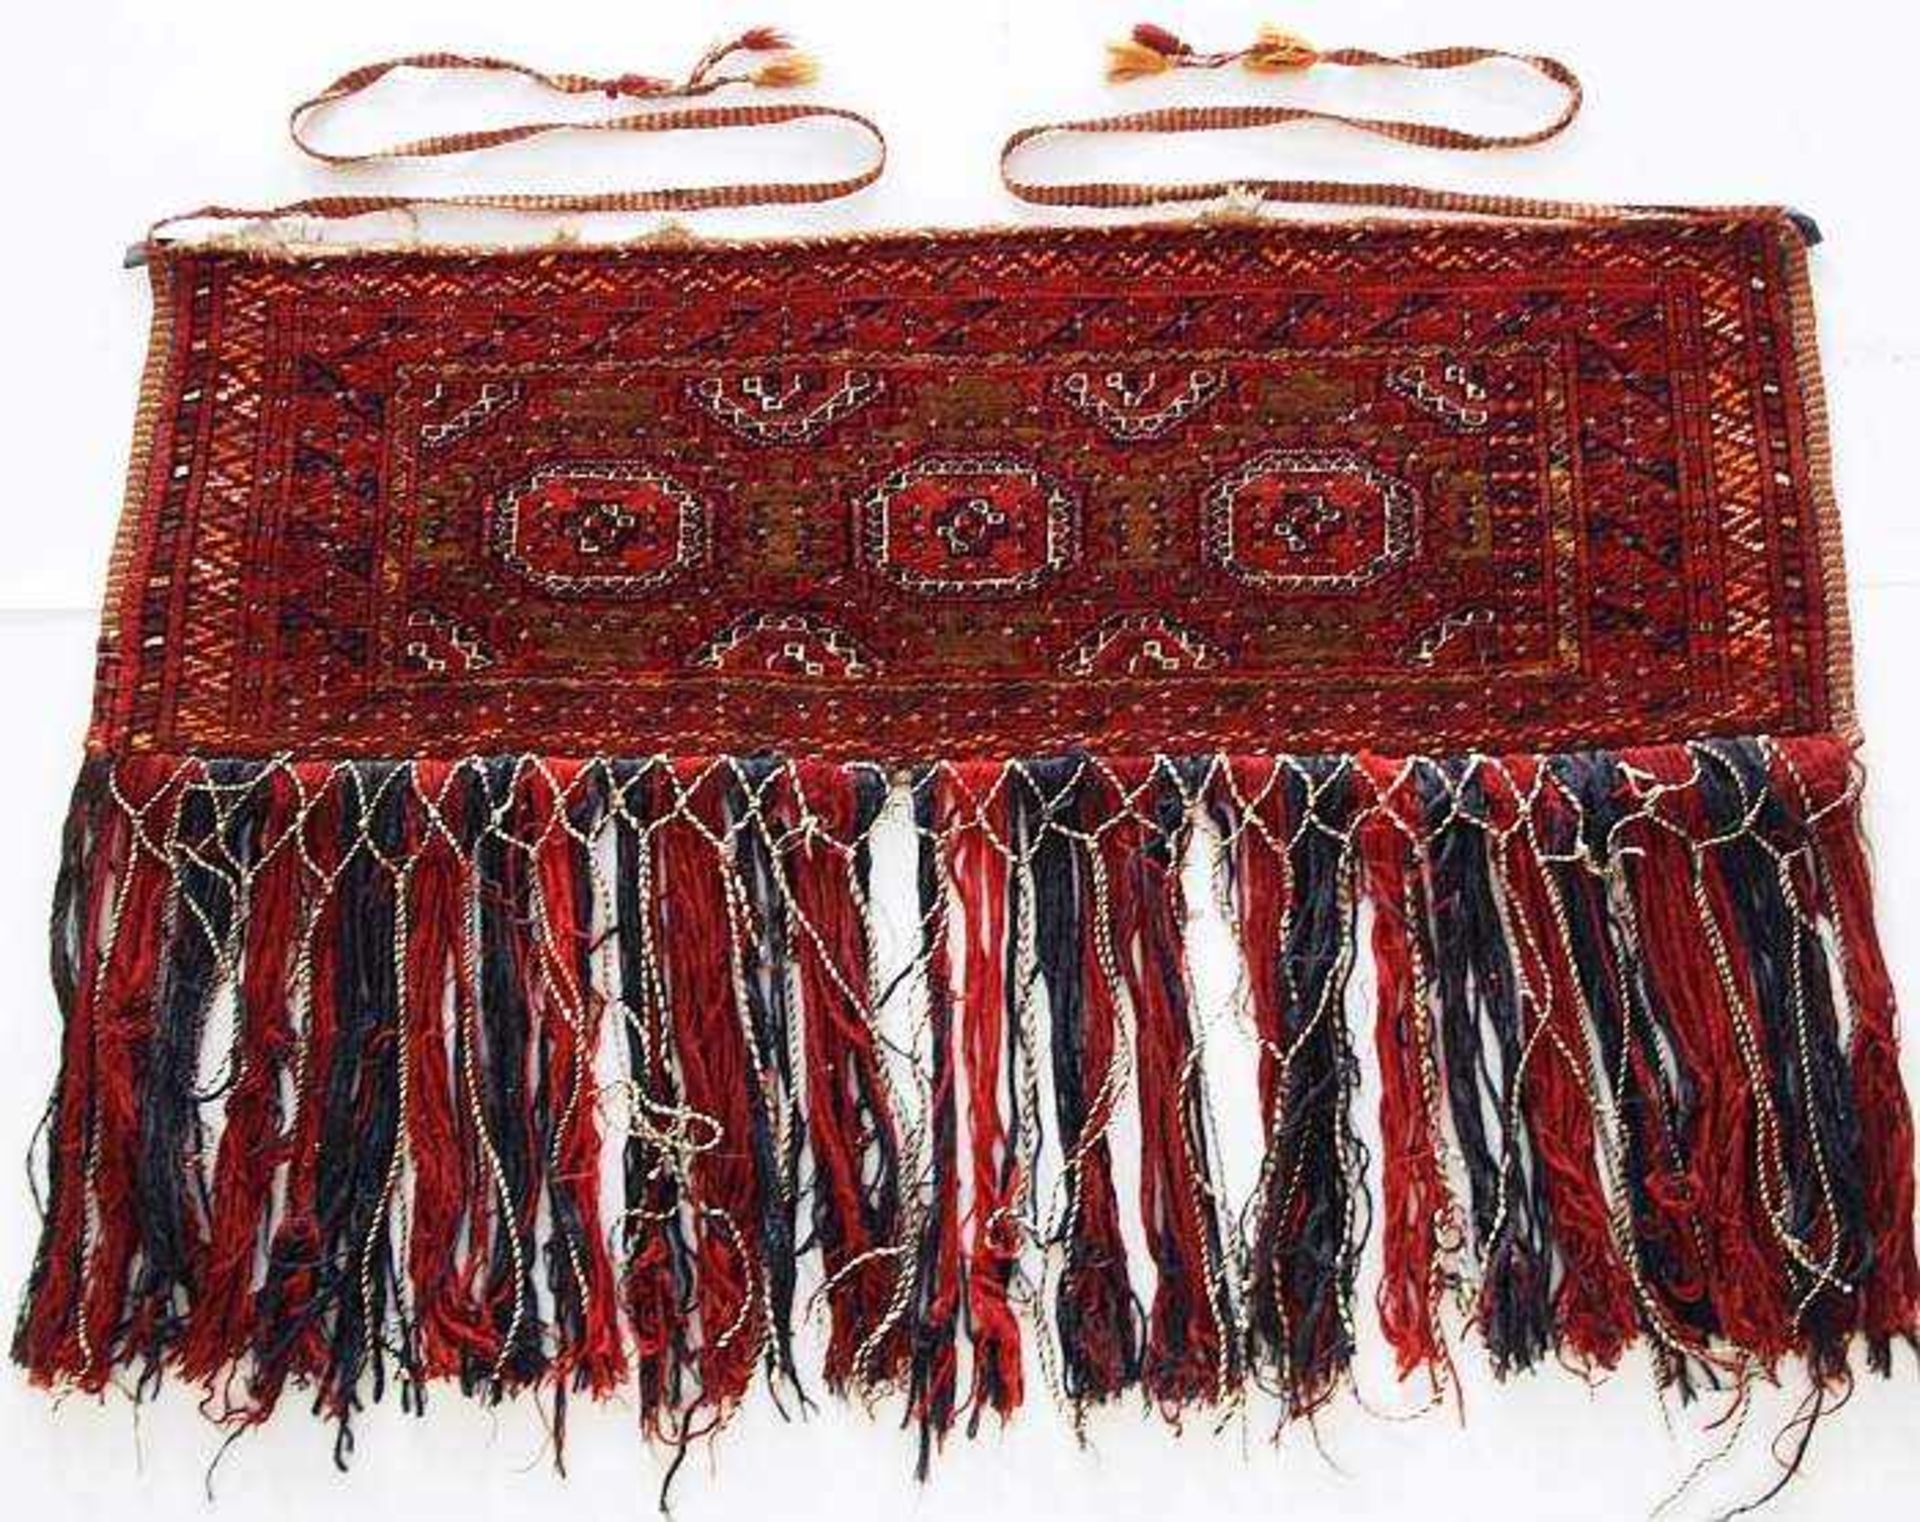 Orientalische Satteldecke. Orientalische Satteldecke. Wohl Jamoud / Turkmenistan. Wolle auf Wolle,